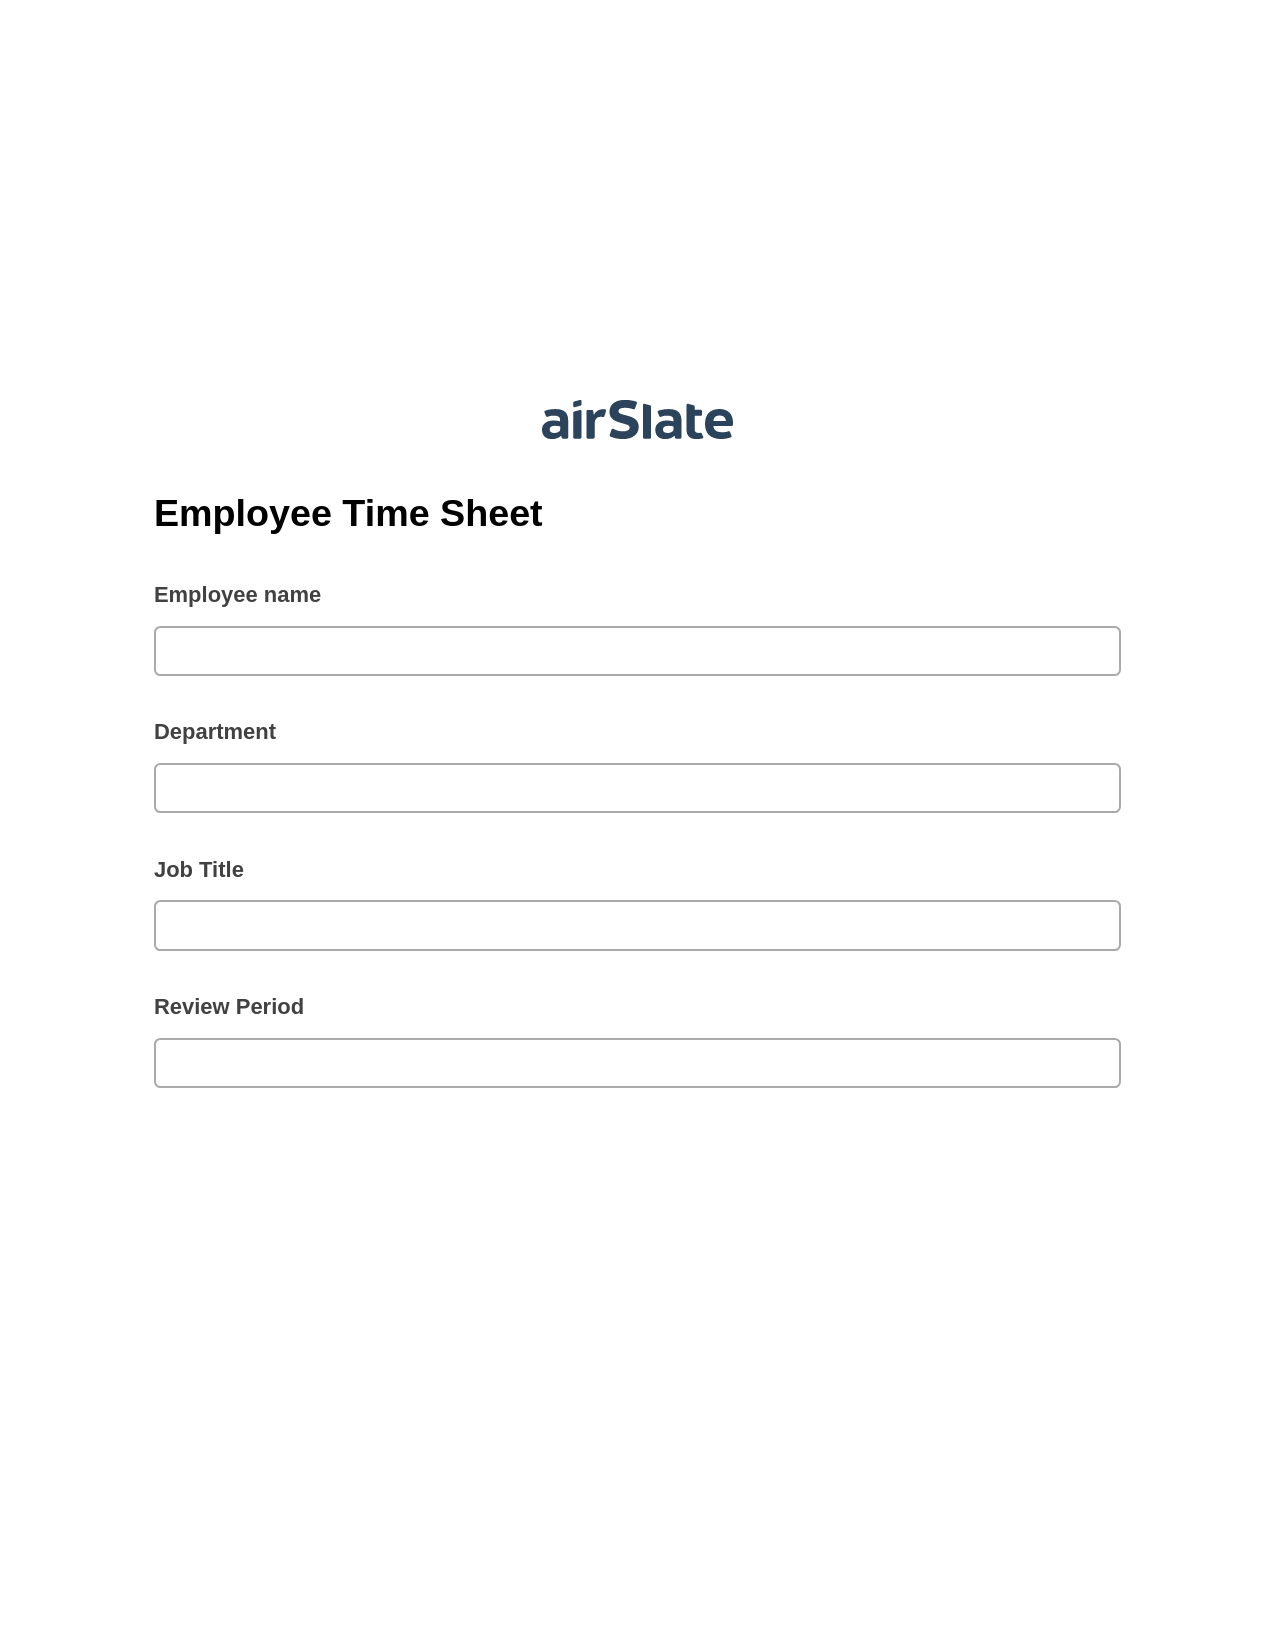 Multirole Employee Time Sheet Pre-fill from Litmos bot, Create slate addon, Archive to Dropbox Bot